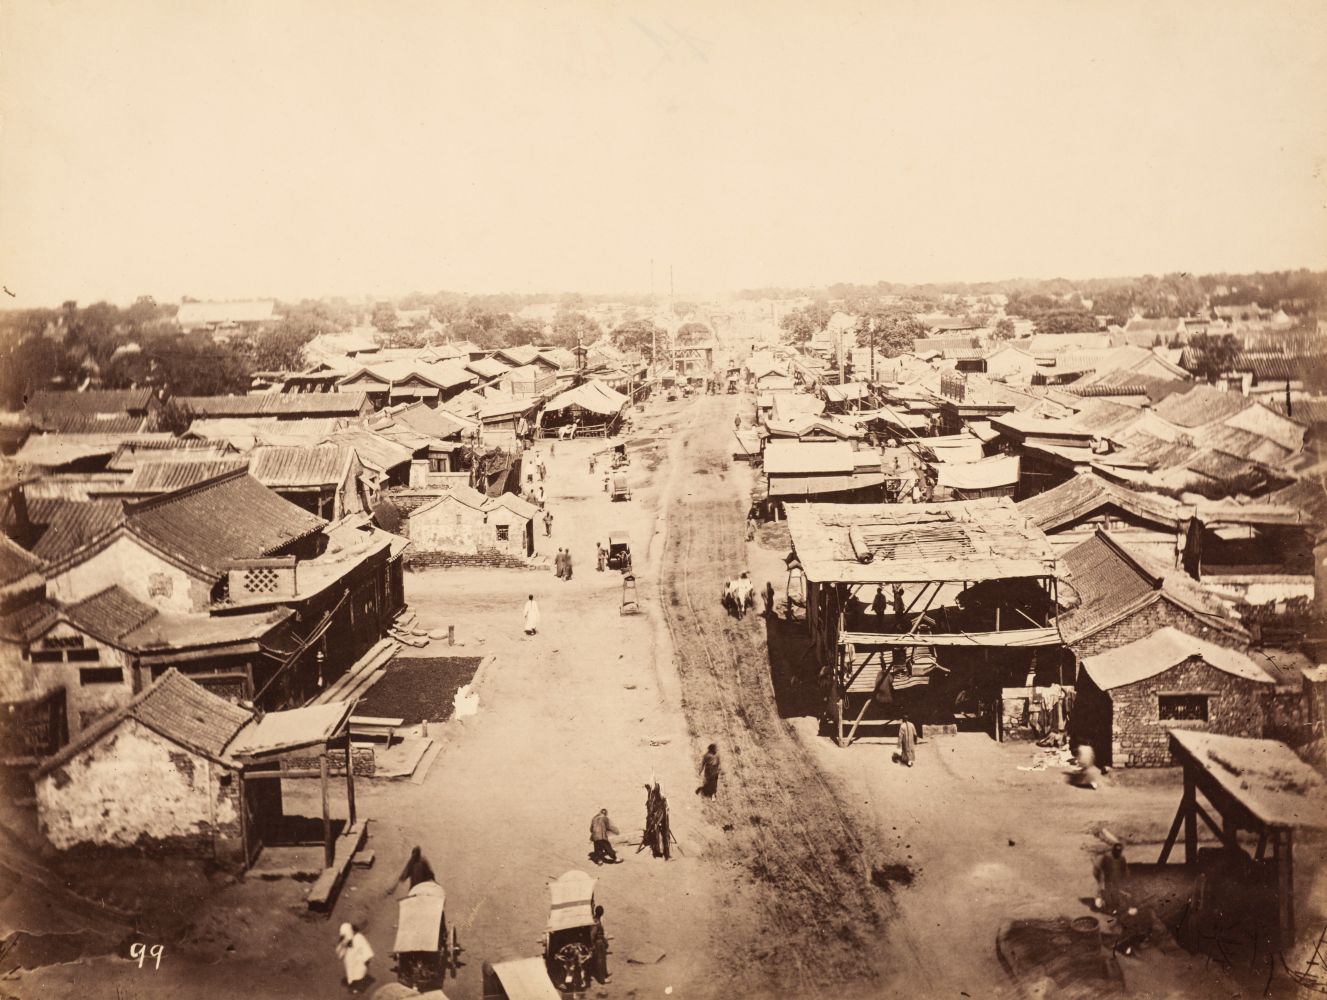 China. Part of the Chinese Quarter, Shanghai, c. 1870